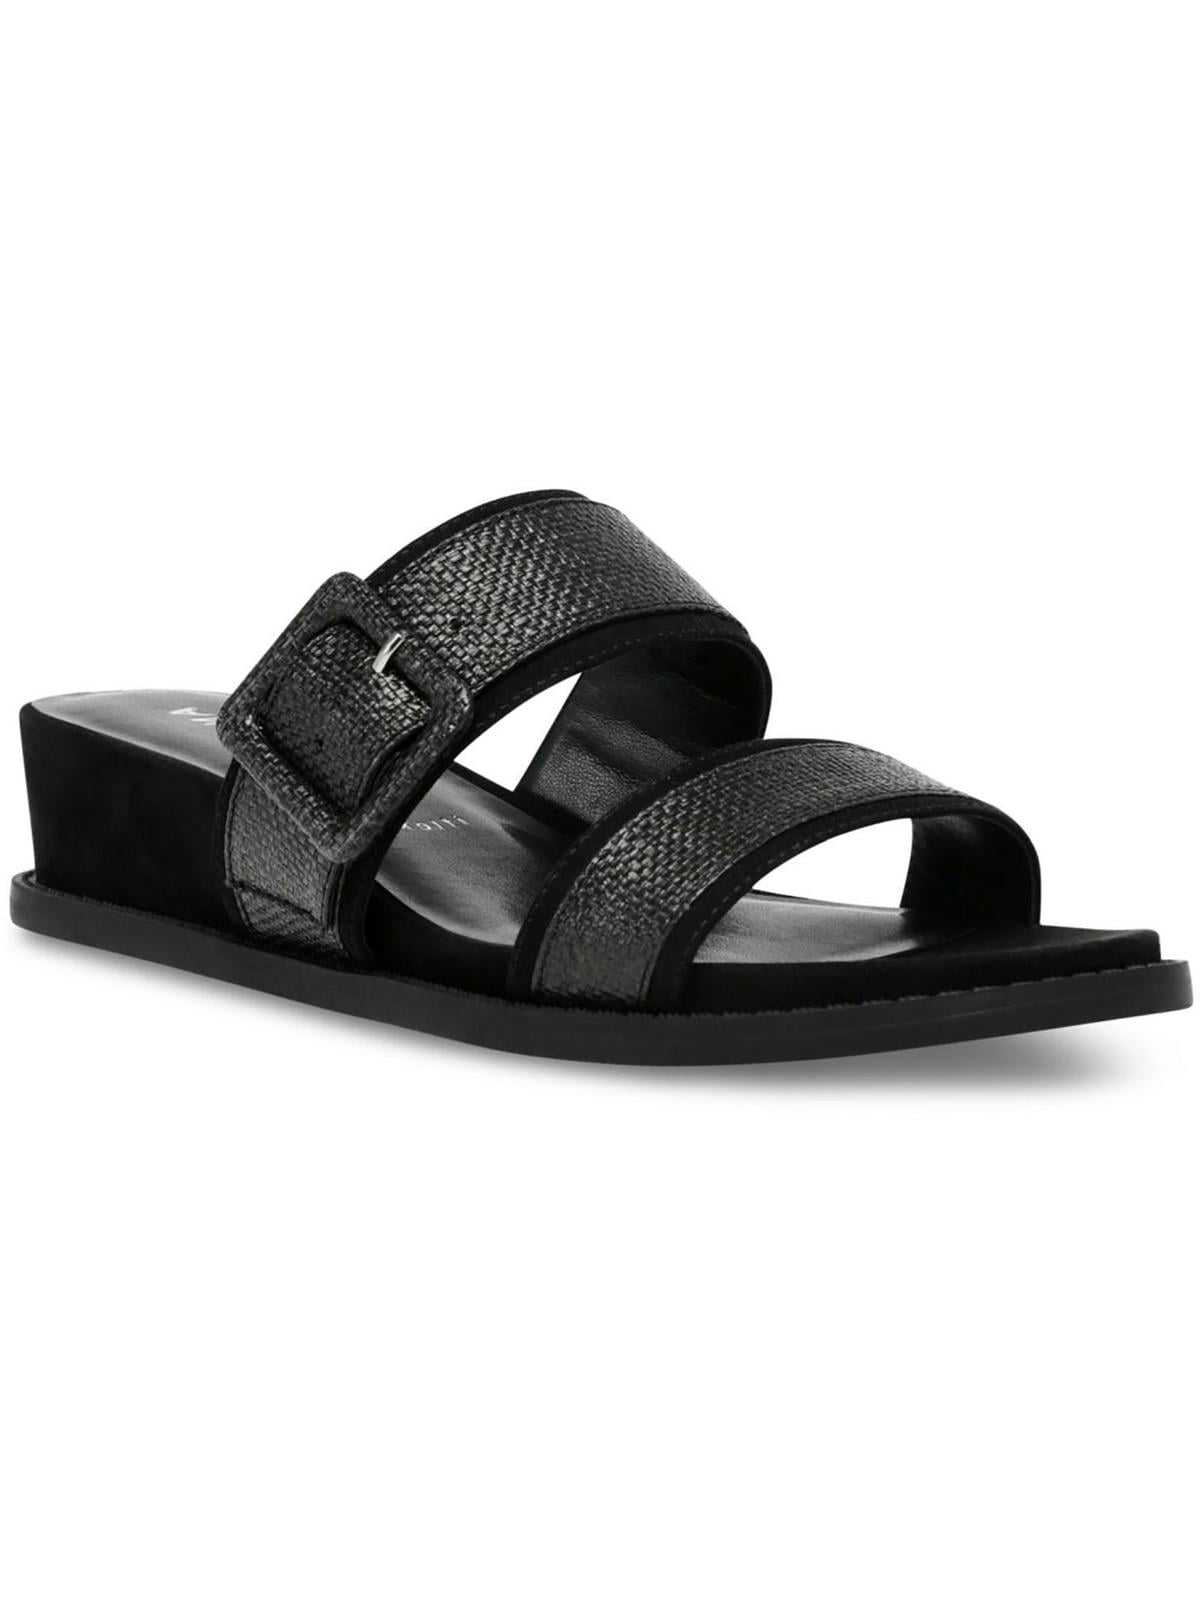 Anne Klein Womens Brenda Slip On Open Toe Wedge Sandals - Walmart.com